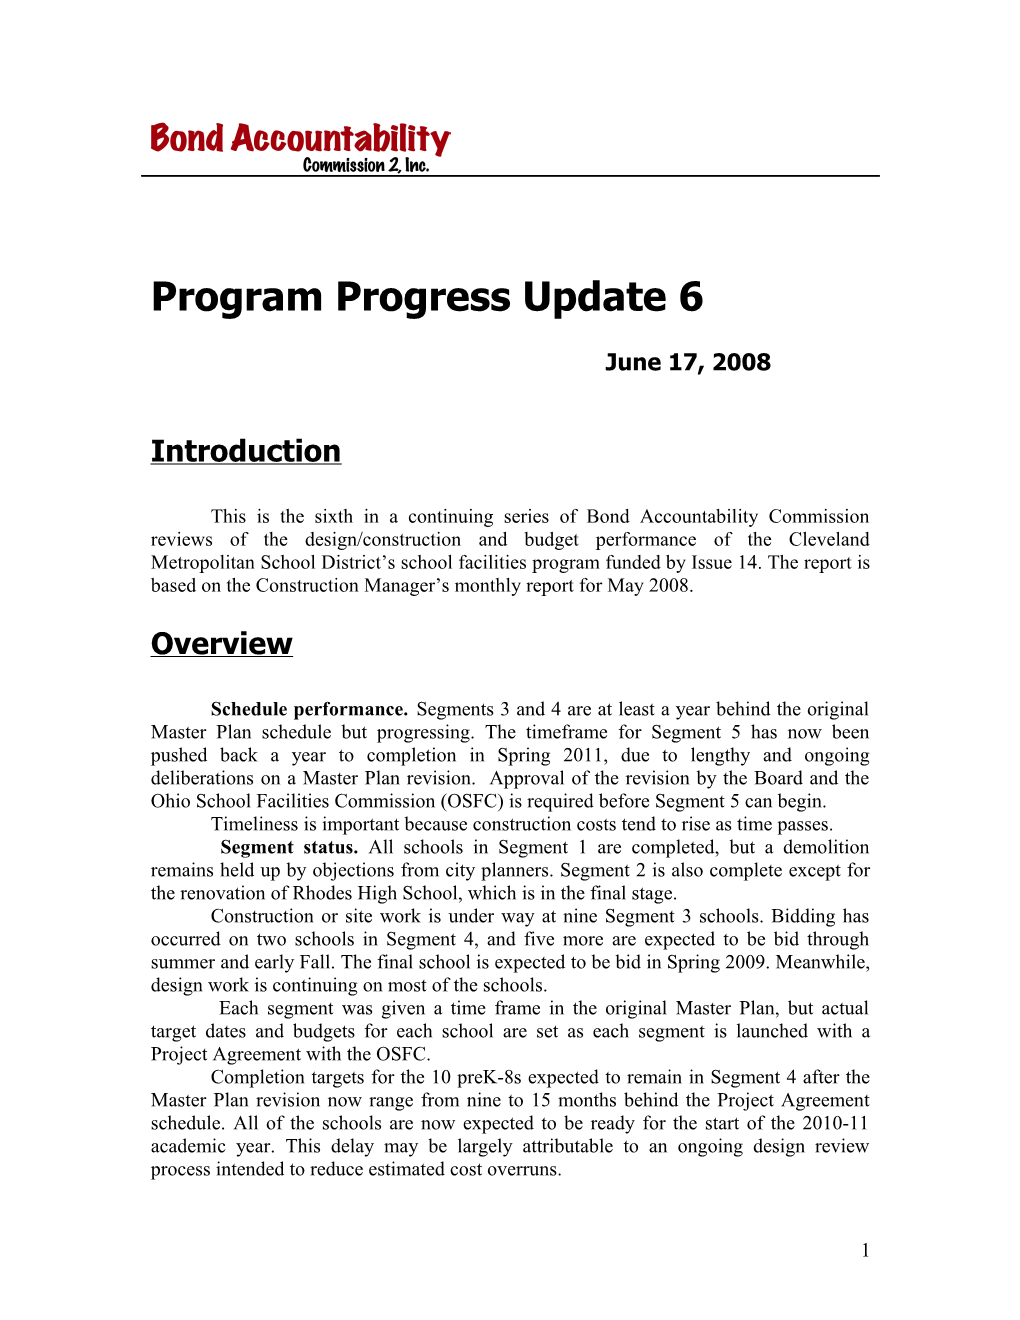 Program Progress Update 6